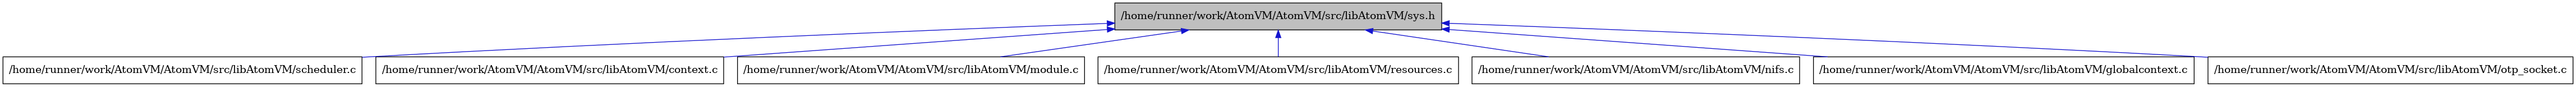 digraph {
    graph [bgcolor="#00000000"]
    node [shape=rectangle style=filled fillcolor="#FFFFFF" font=Helvetica padding=2]
    edge [color="#1414CE"]
    "8" [label="/home/runner/work/AtomVM/AtomVM/src/libAtomVM/scheduler.c" tooltip="/home/runner/work/AtomVM/AtomVM/src/libAtomVM/scheduler.c"]
    "2" [label="/home/runner/work/AtomVM/AtomVM/src/libAtomVM/context.c" tooltip="/home/runner/work/AtomVM/AtomVM/src/libAtomVM/context.c"]
    "4" [label="/home/runner/work/AtomVM/AtomVM/src/libAtomVM/module.c" tooltip="/home/runner/work/AtomVM/AtomVM/src/libAtomVM/module.c"]
    "7" [label="/home/runner/work/AtomVM/AtomVM/src/libAtomVM/resources.c" tooltip="/home/runner/work/AtomVM/AtomVM/src/libAtomVM/resources.c"]
    "1" [label="/home/runner/work/AtomVM/AtomVM/src/libAtomVM/sys.h" tooltip="/home/runner/work/AtomVM/AtomVM/src/libAtomVM/sys.h" fillcolor="#BFBFBF"]
    "5" [label="/home/runner/work/AtomVM/AtomVM/src/libAtomVM/nifs.c" tooltip="/home/runner/work/AtomVM/AtomVM/src/libAtomVM/nifs.c"]
    "3" [label="/home/runner/work/AtomVM/AtomVM/src/libAtomVM/globalcontext.c" tooltip="/home/runner/work/AtomVM/AtomVM/src/libAtomVM/globalcontext.c"]
    "6" [label="/home/runner/work/AtomVM/AtomVM/src/libAtomVM/otp_socket.c" tooltip="/home/runner/work/AtomVM/AtomVM/src/libAtomVM/otp_socket.c"]
    "1" -> "2" [dir=back tooltip="include"]
    "1" -> "3" [dir=back tooltip="include"]
    "1" -> "4" [dir=back tooltip="include"]
    "1" -> "5" [dir=back tooltip="include"]
    "1" -> "6" [dir=back tooltip="include"]
    "1" -> "7" [dir=back tooltip="include"]
    "1" -> "8" [dir=back tooltip="include"]
}